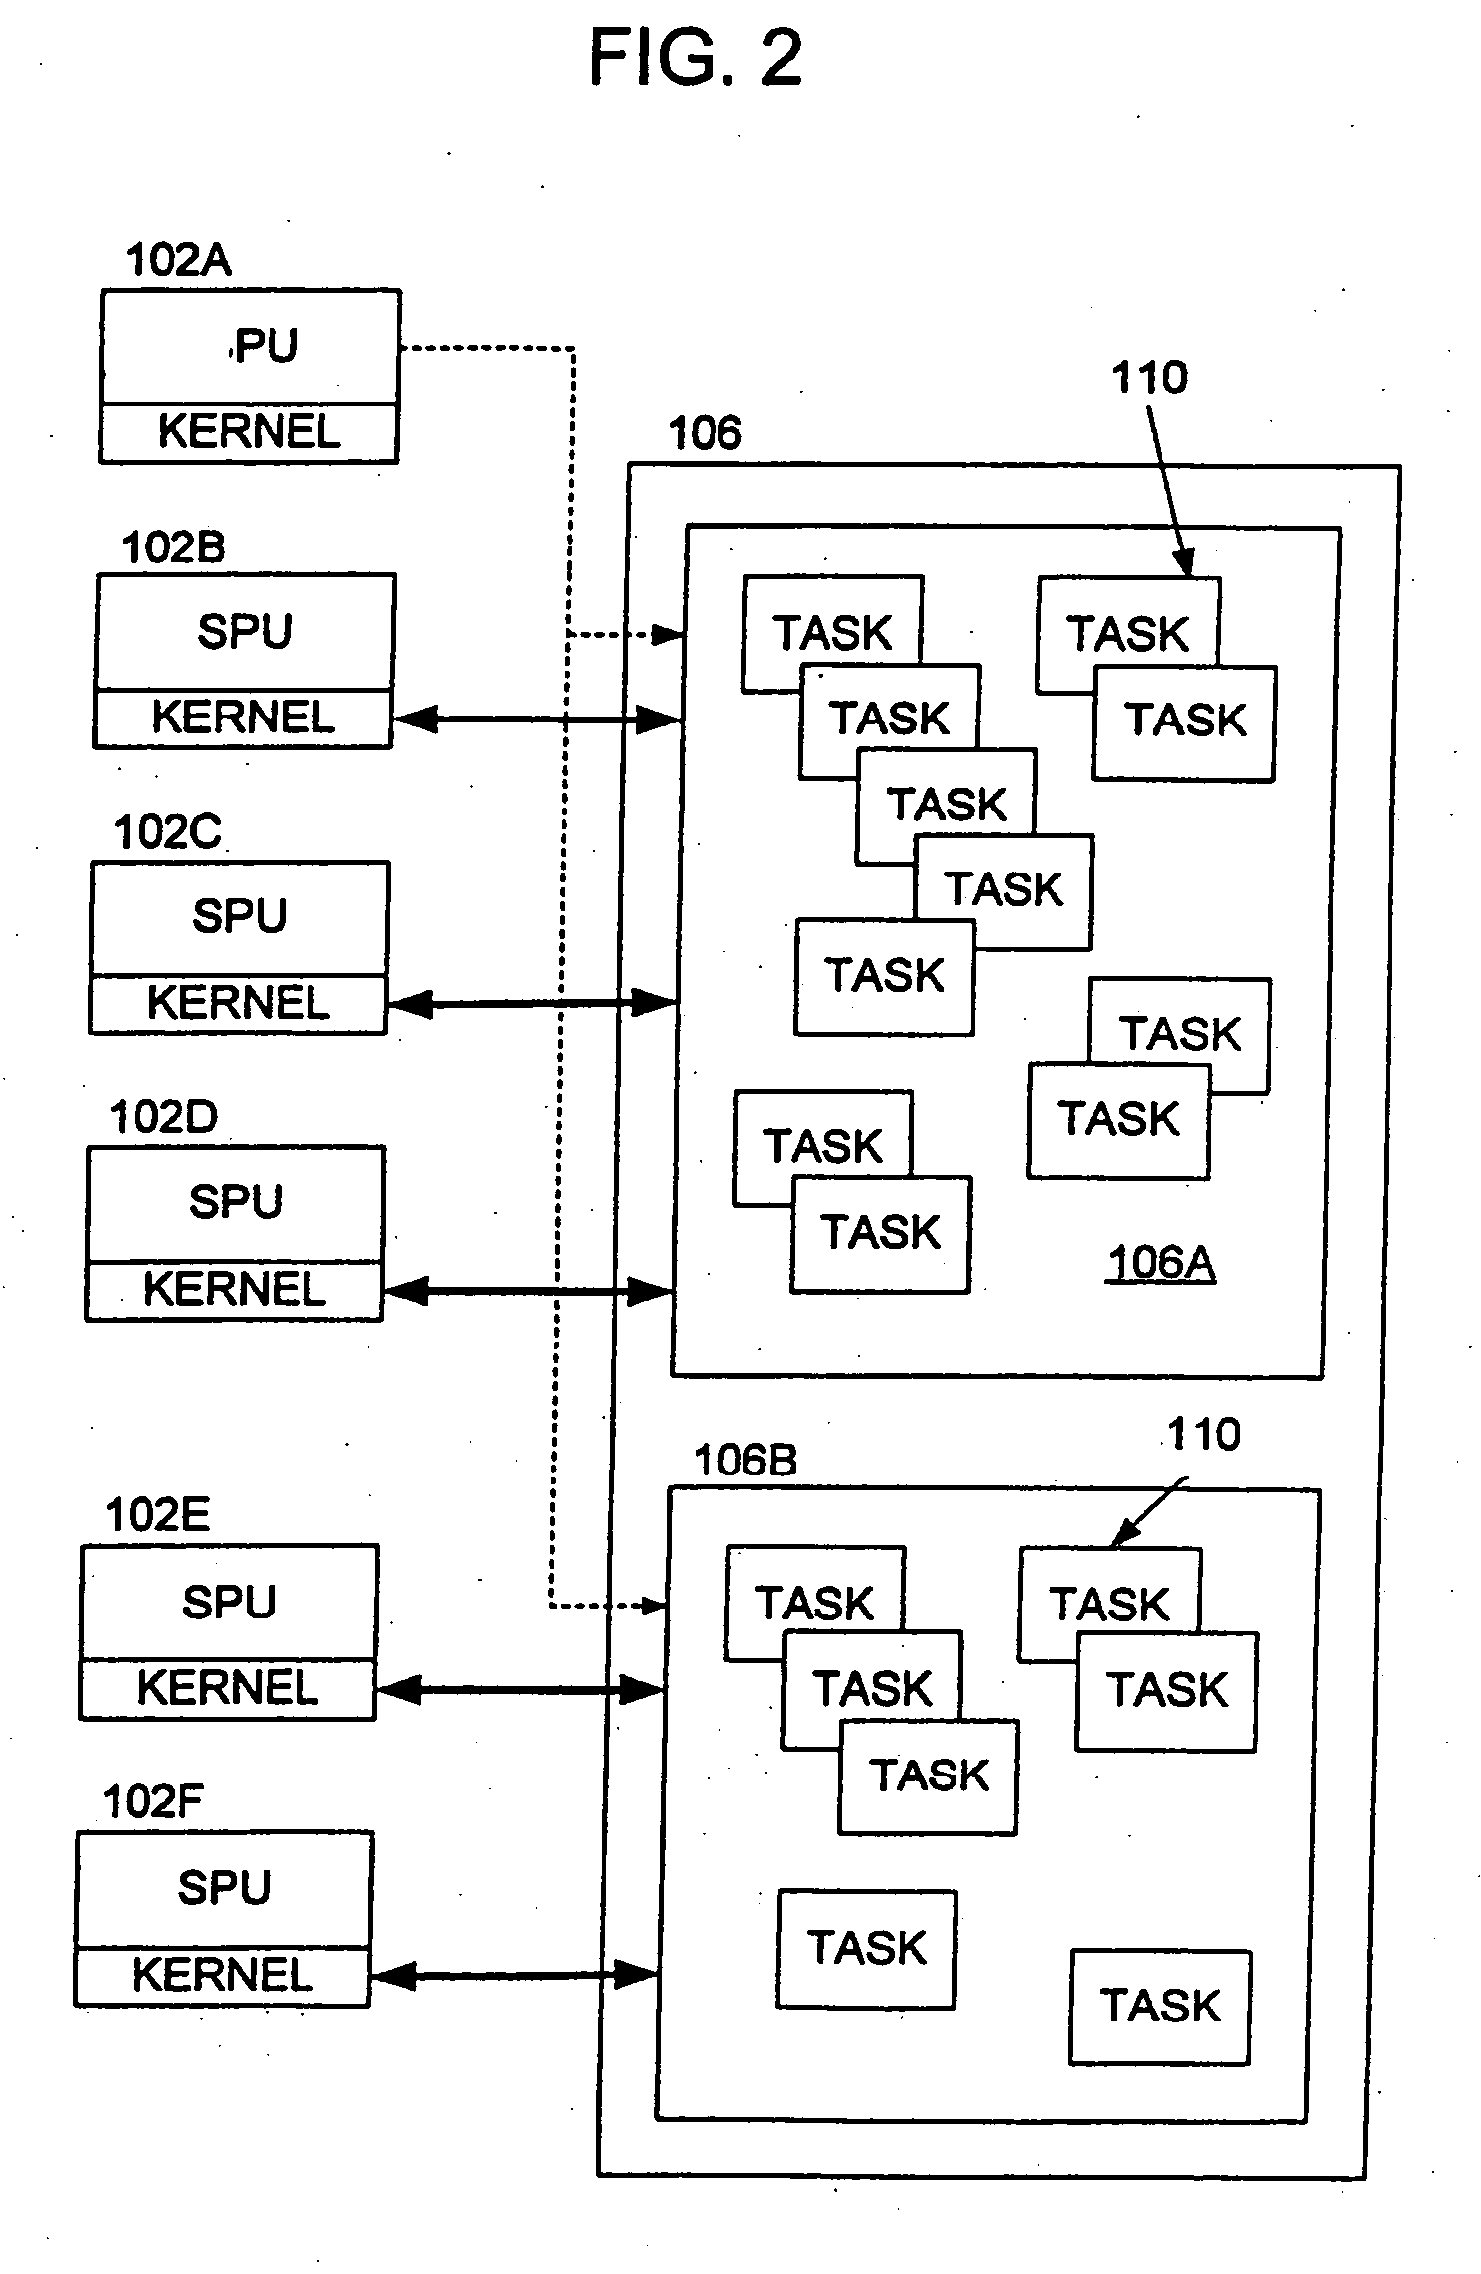 Processor task migration over a network in a multi-processor system